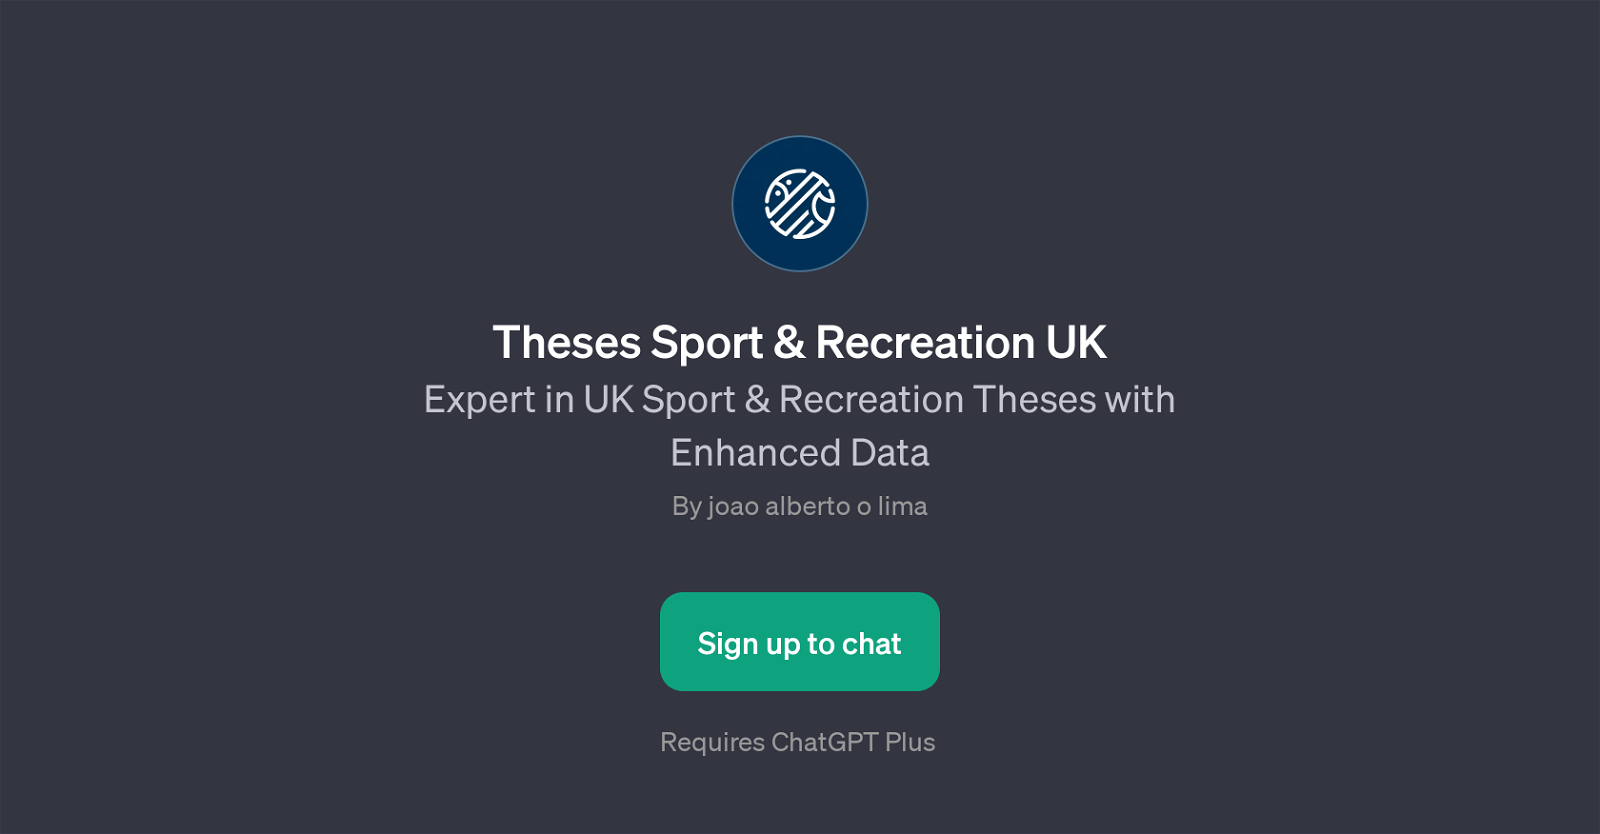 Theses Sport & Recreation UK website